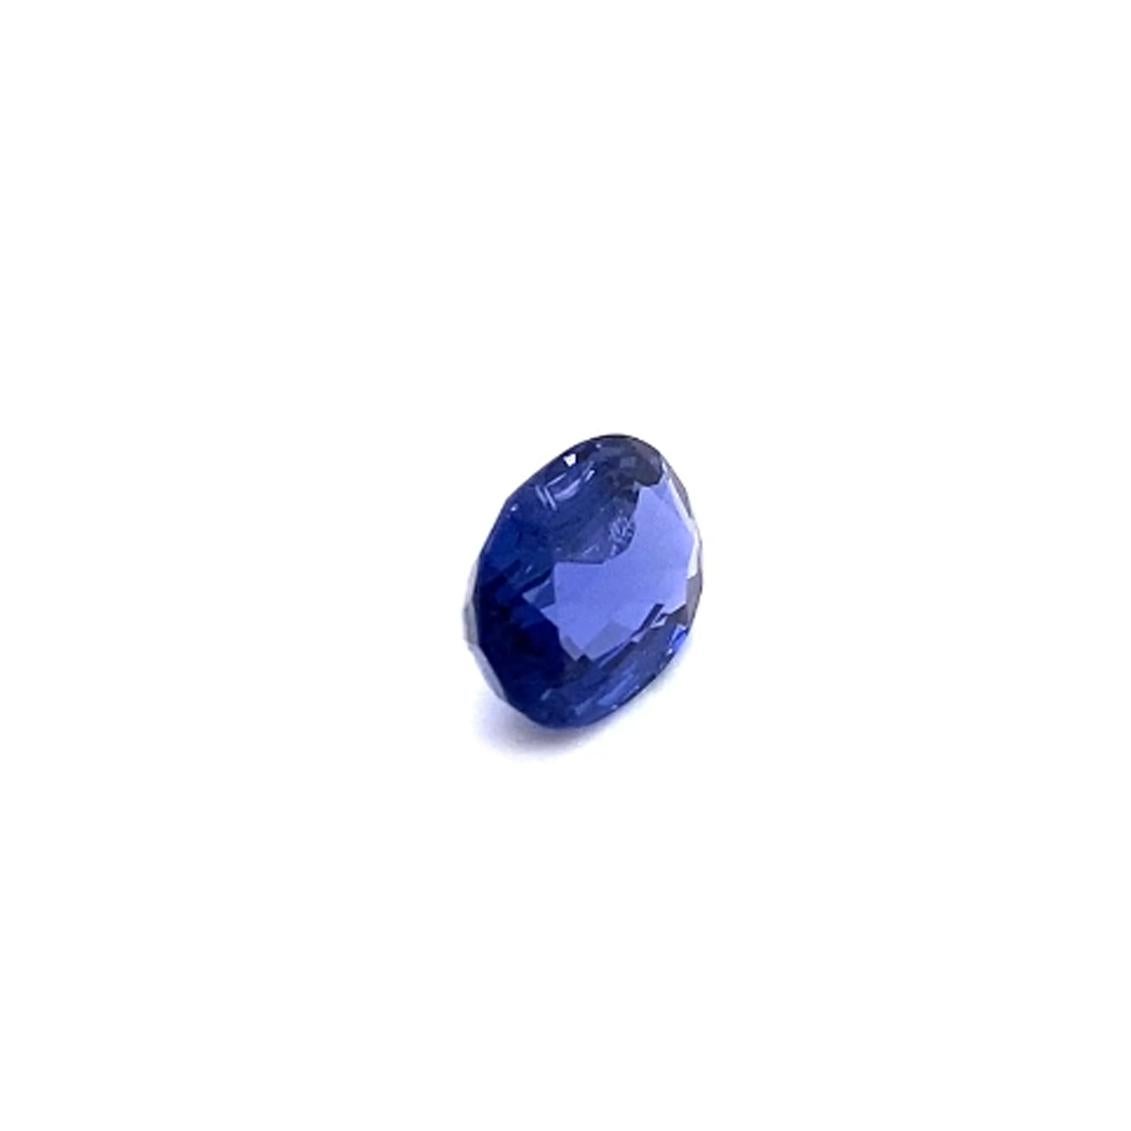 Oval Cut Bellerophon Gemlab Certified 4.34ct Blue Sapphire Natural Gemstone For Sale